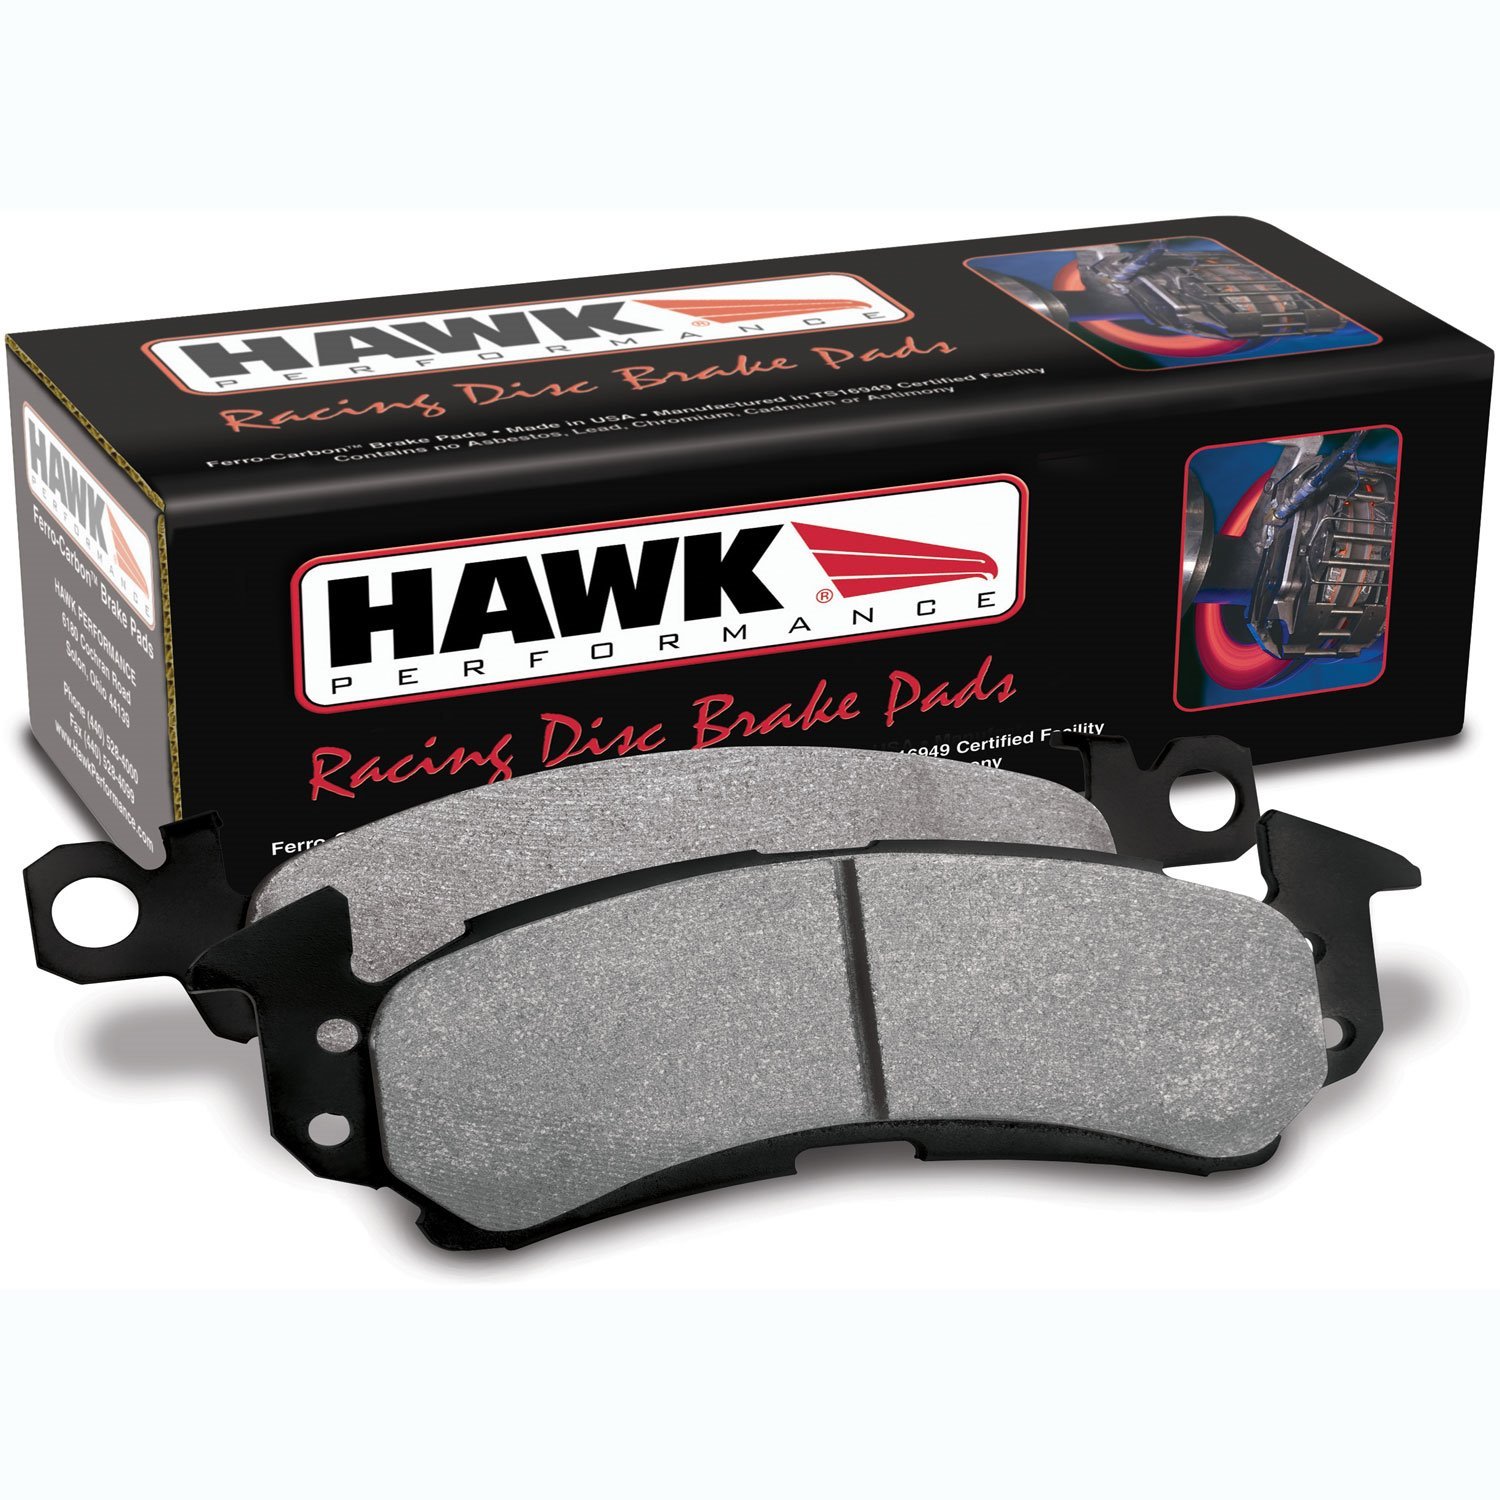 Disc Brake Pad HT-10 w/0.661 Thickness